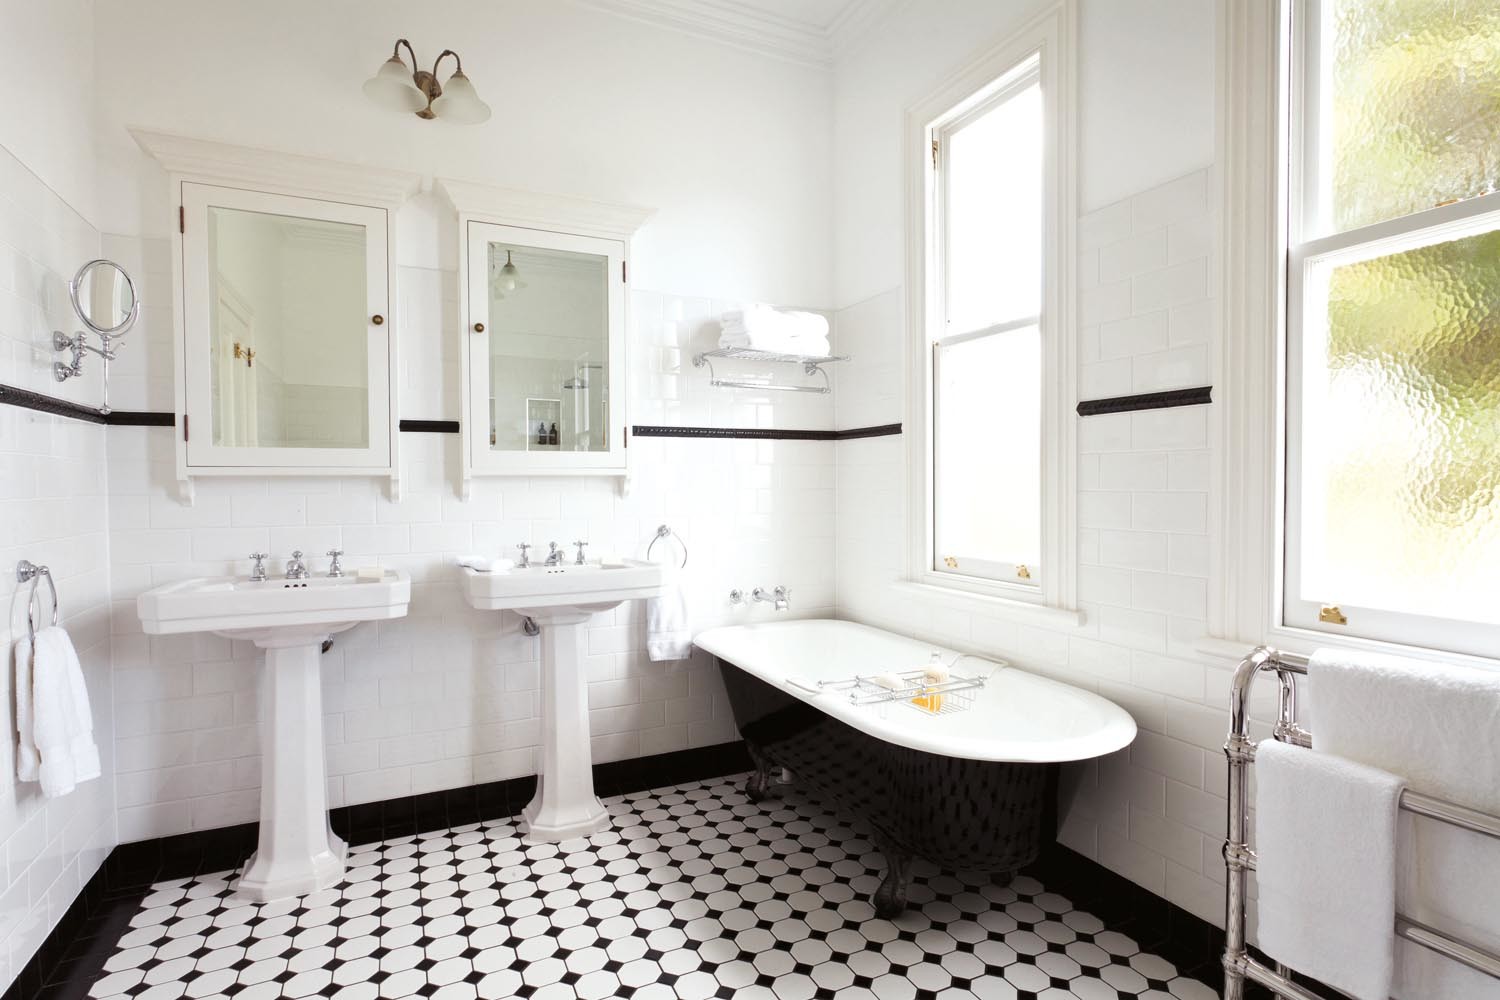 1920s Style Bathrooms That Inspire Rue, 1920s Bathroom Vanity